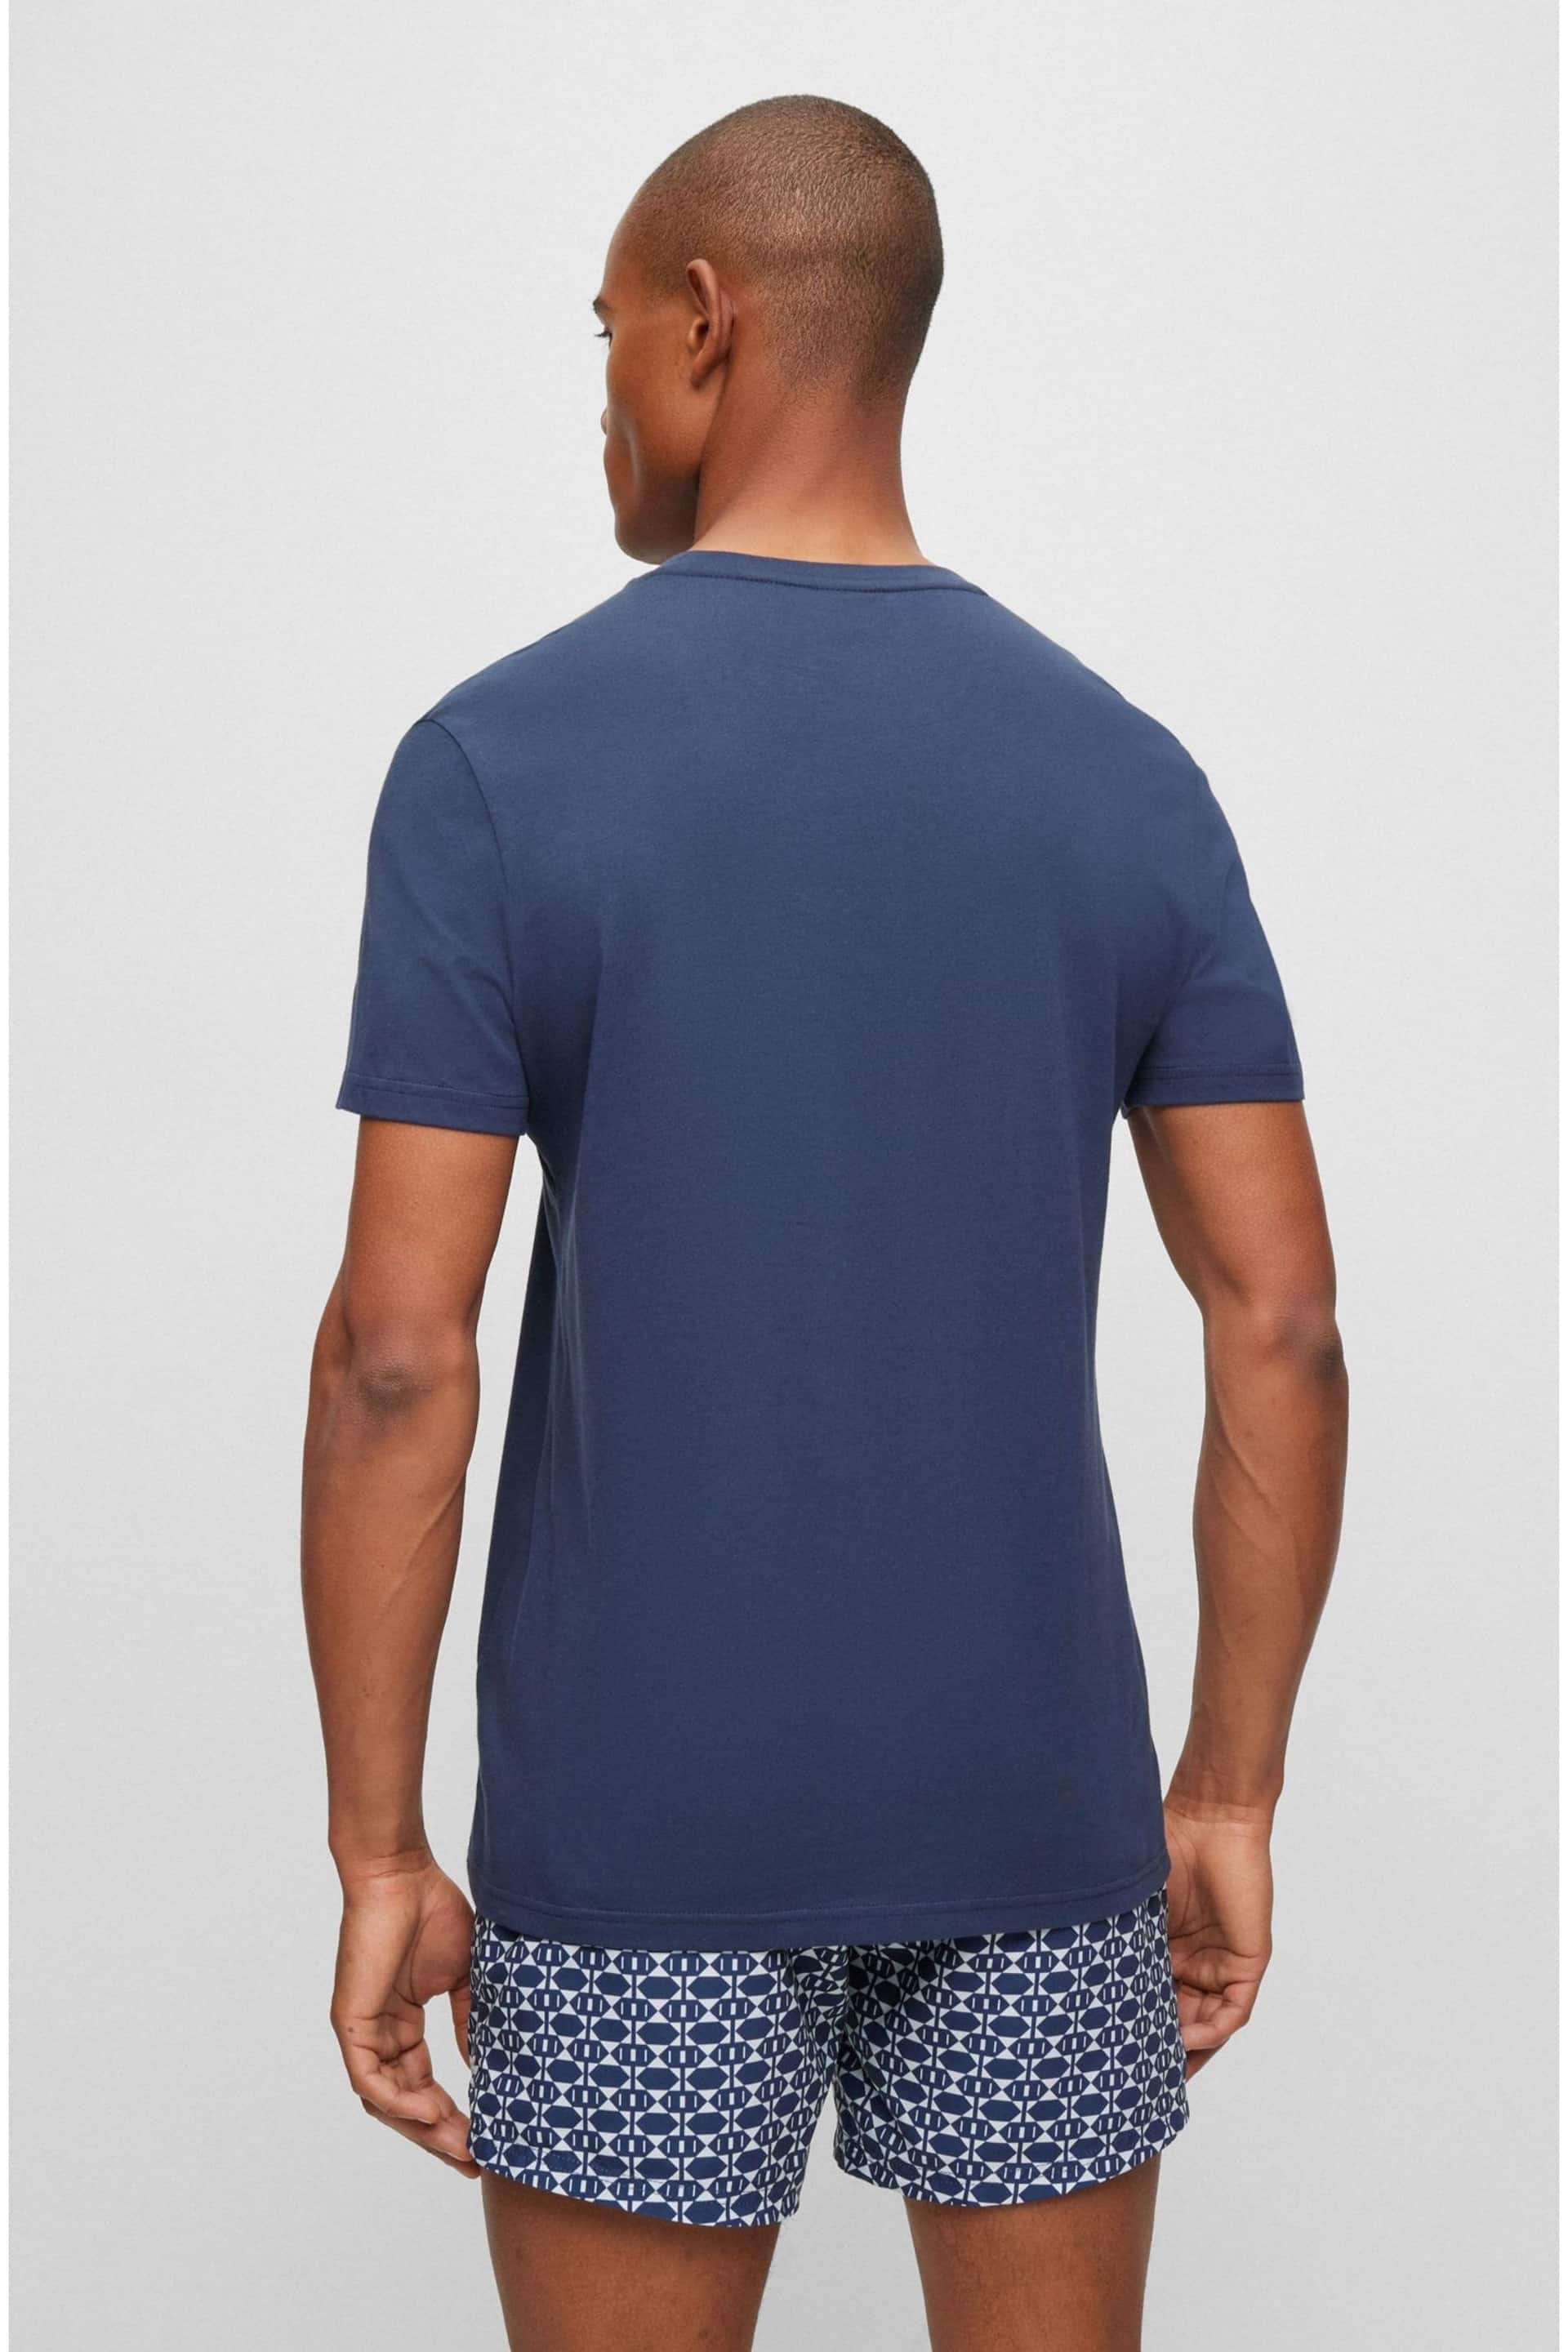 BOSS Dark Blue Large Chest Logo T-Shirt - Image 1 of 5